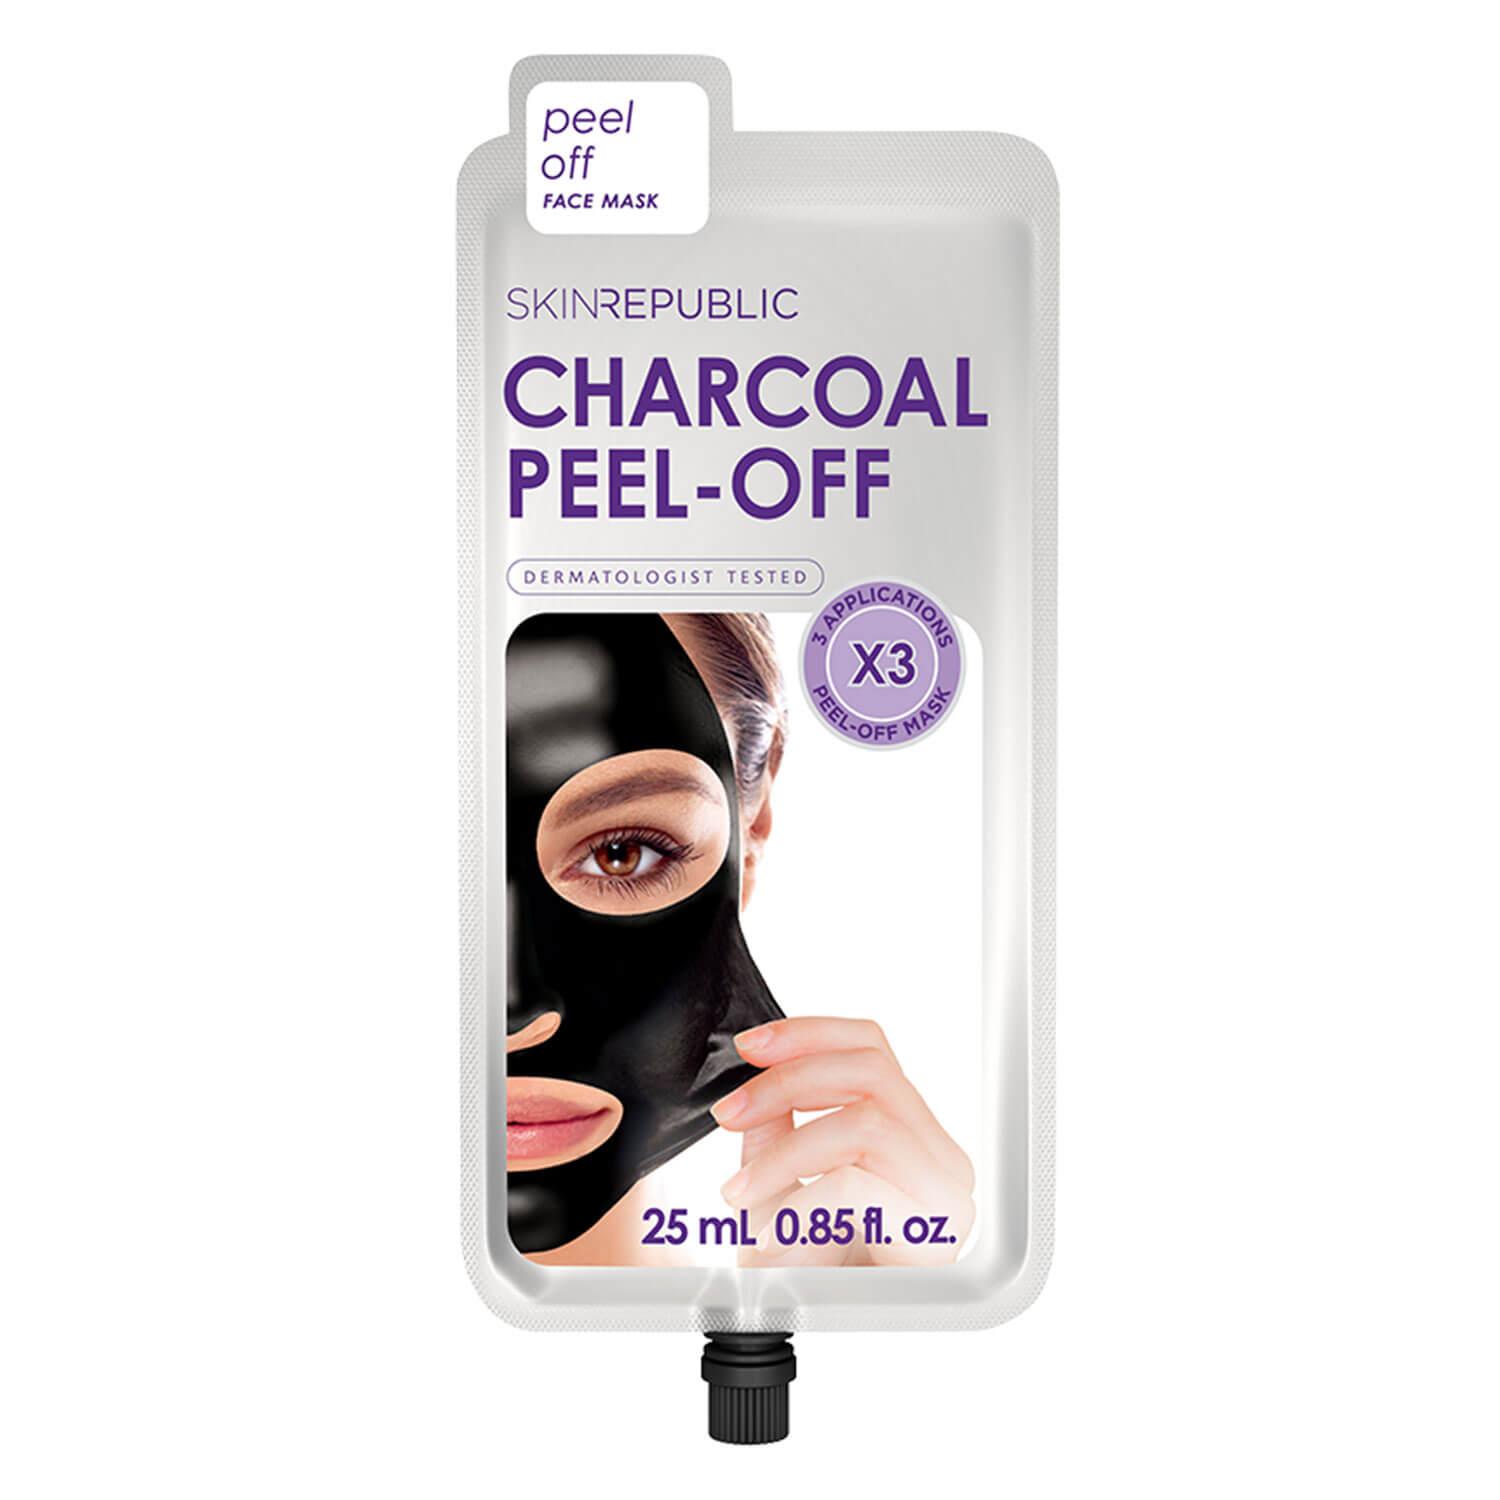 Skin Republic - Charcoal Peel-Off Face Mask